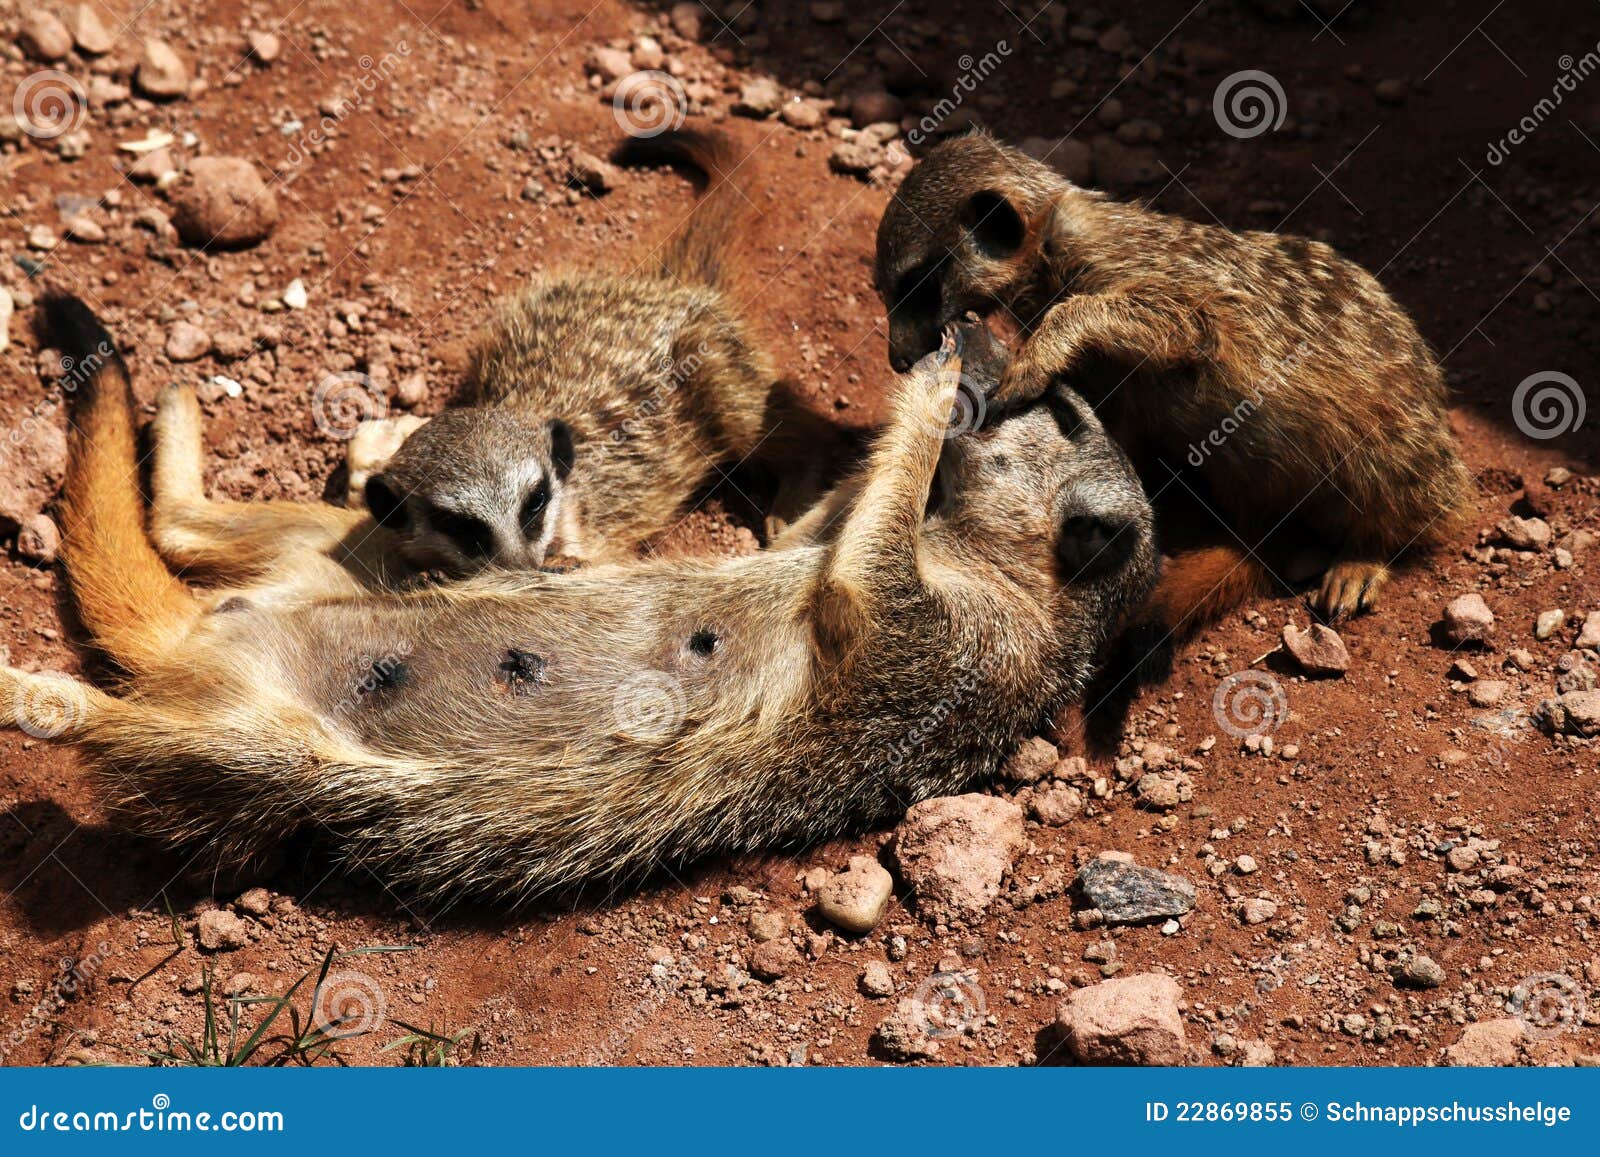 meerkats cuddle togehter